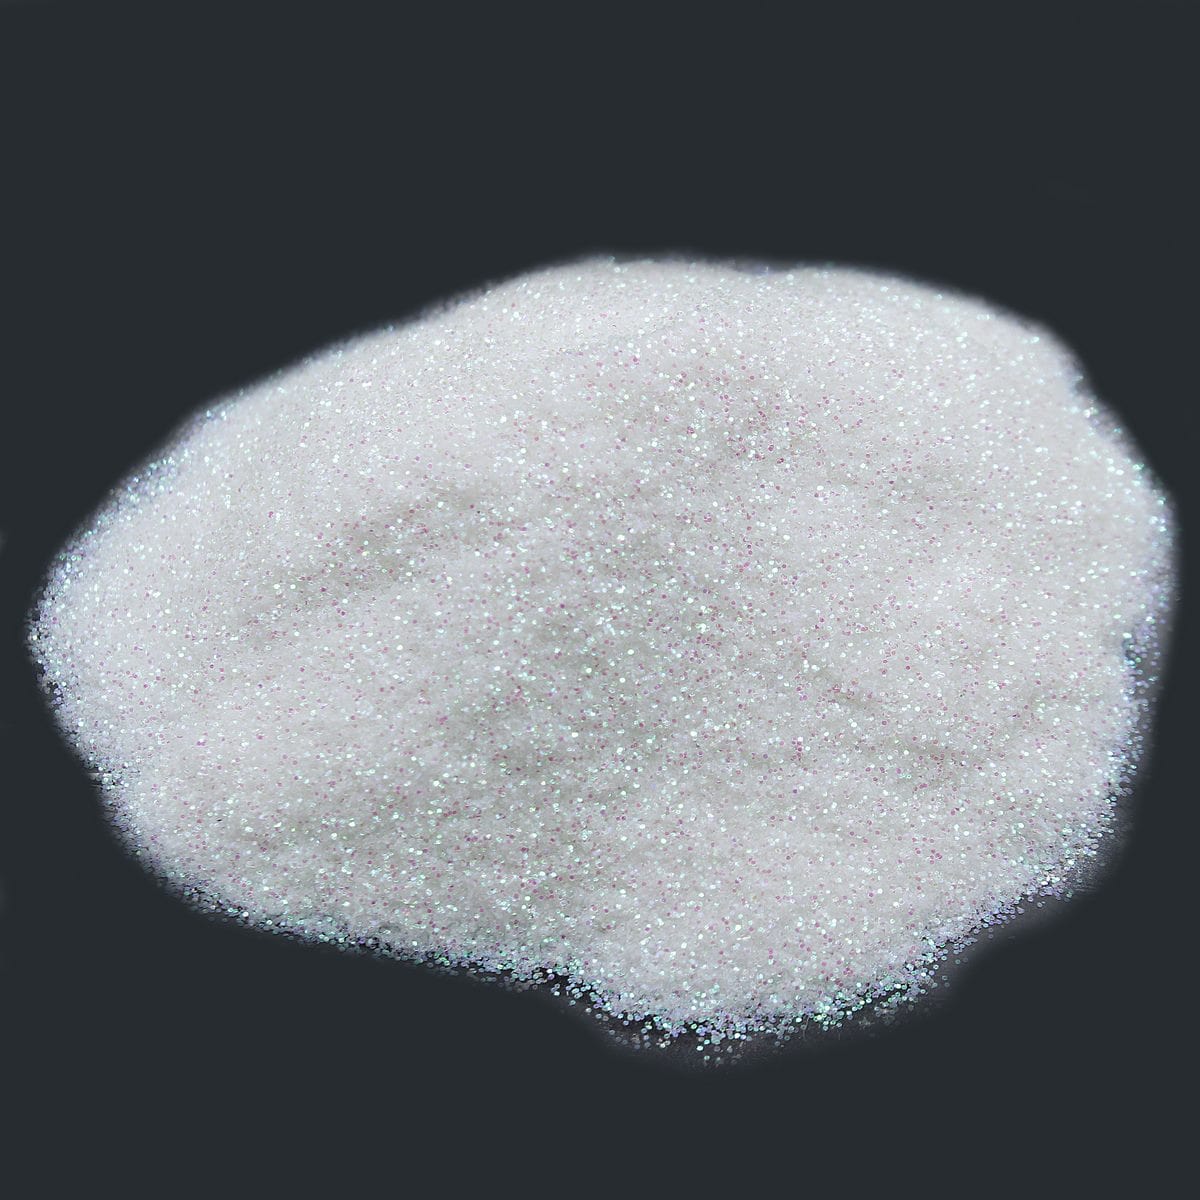 jags-mumbai Glitter Powder Jags Glitter Powder Milky White 20gm